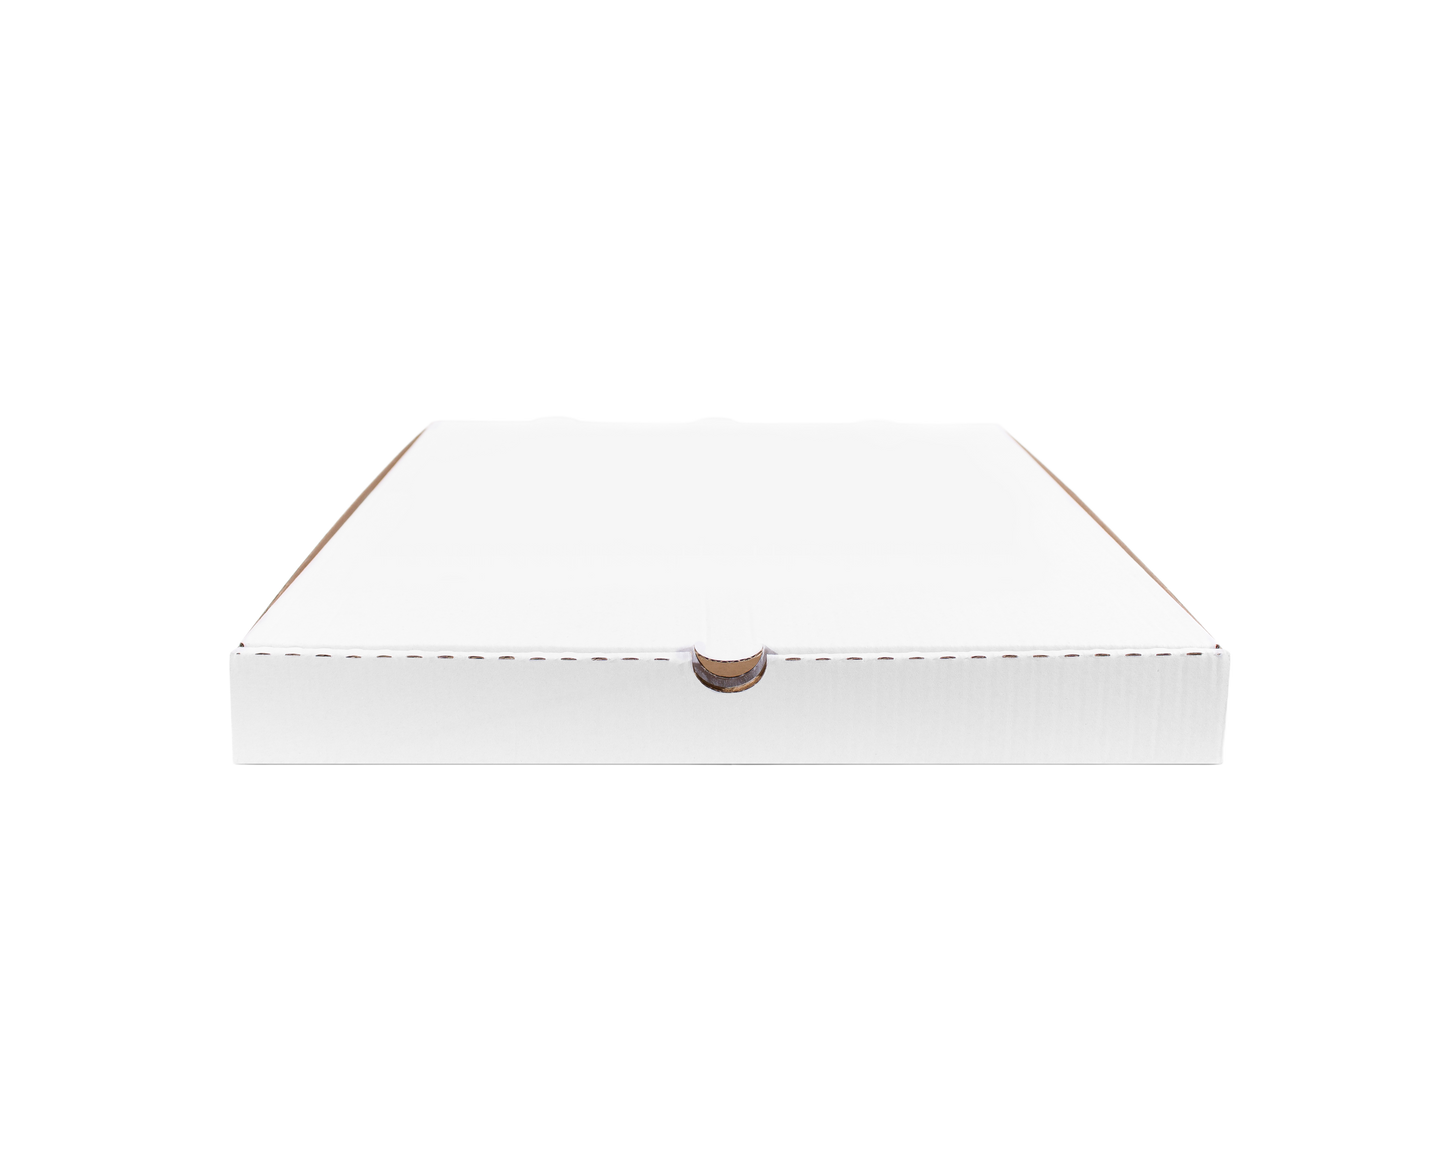 Cajas para pizza personalizadas - 18" x 18" x 2" - 50/paquete